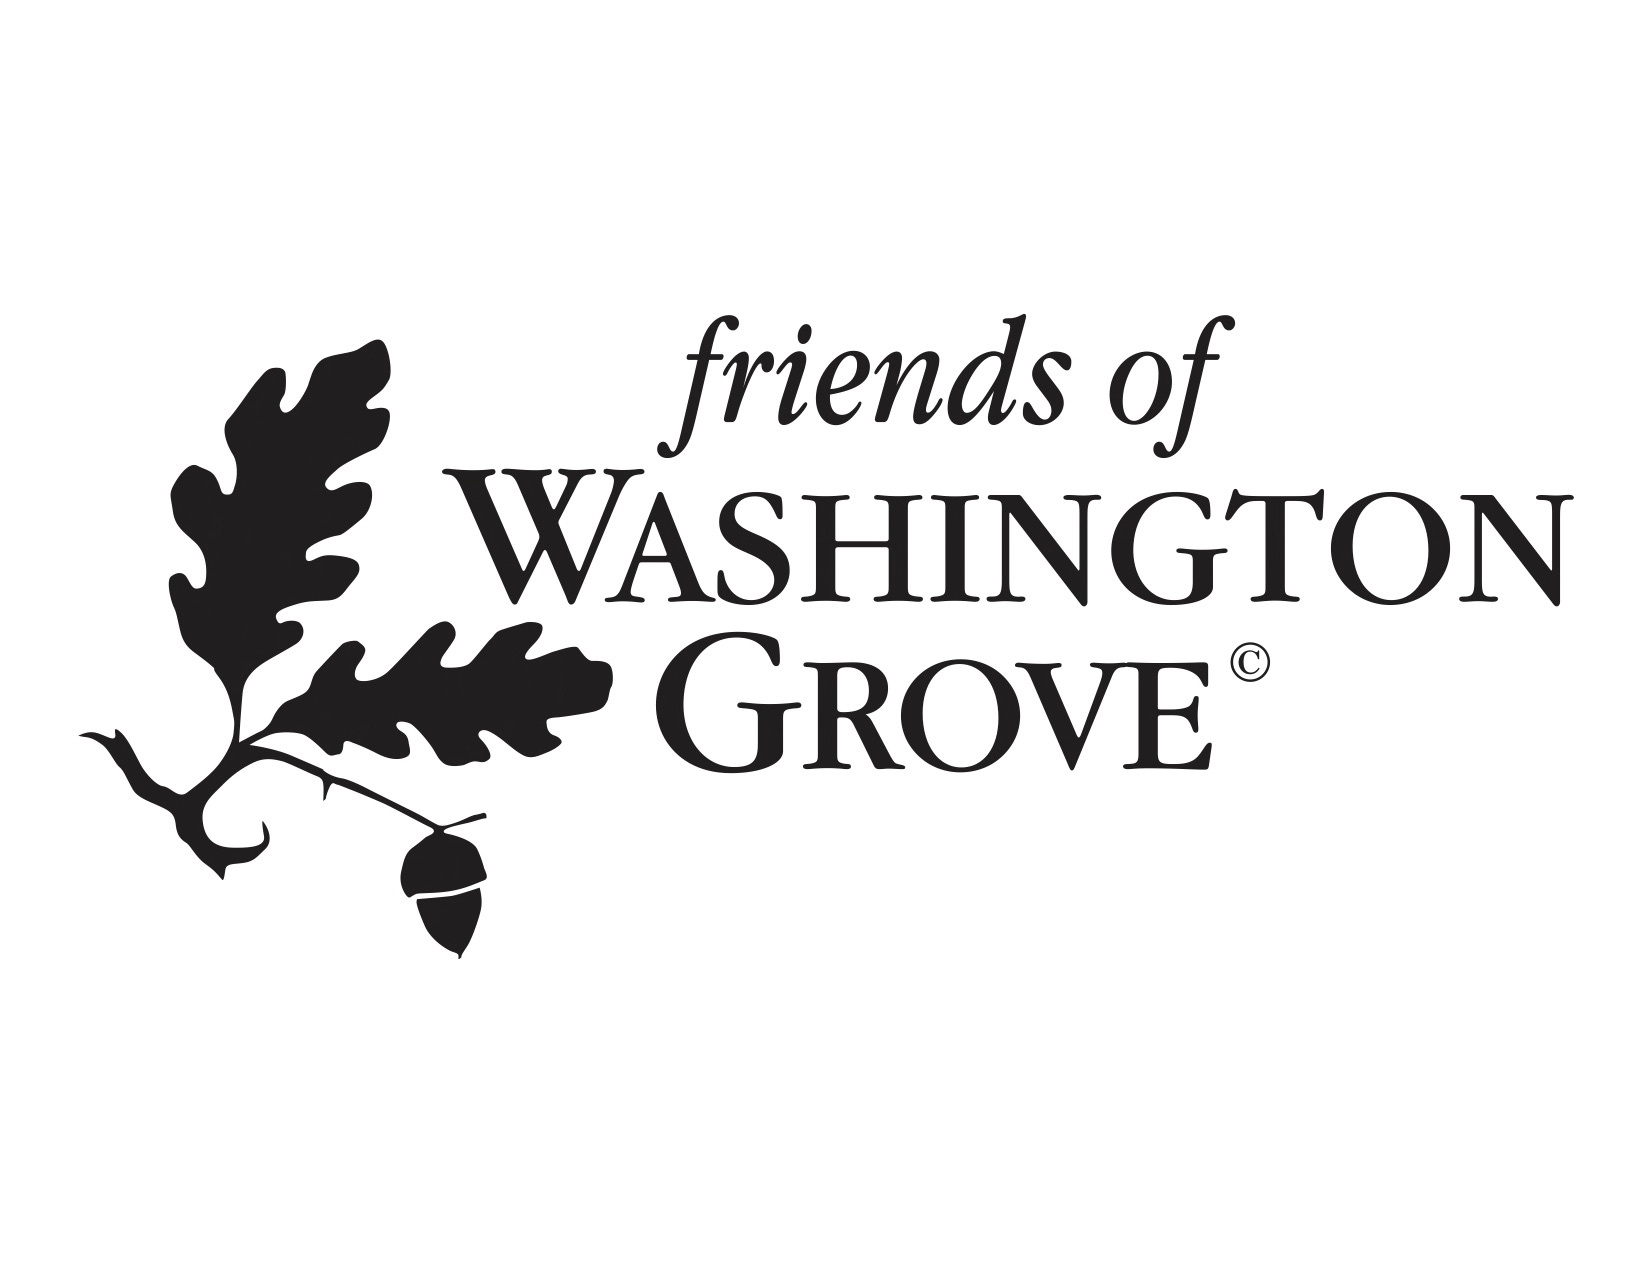 The Friends of Washington Grove